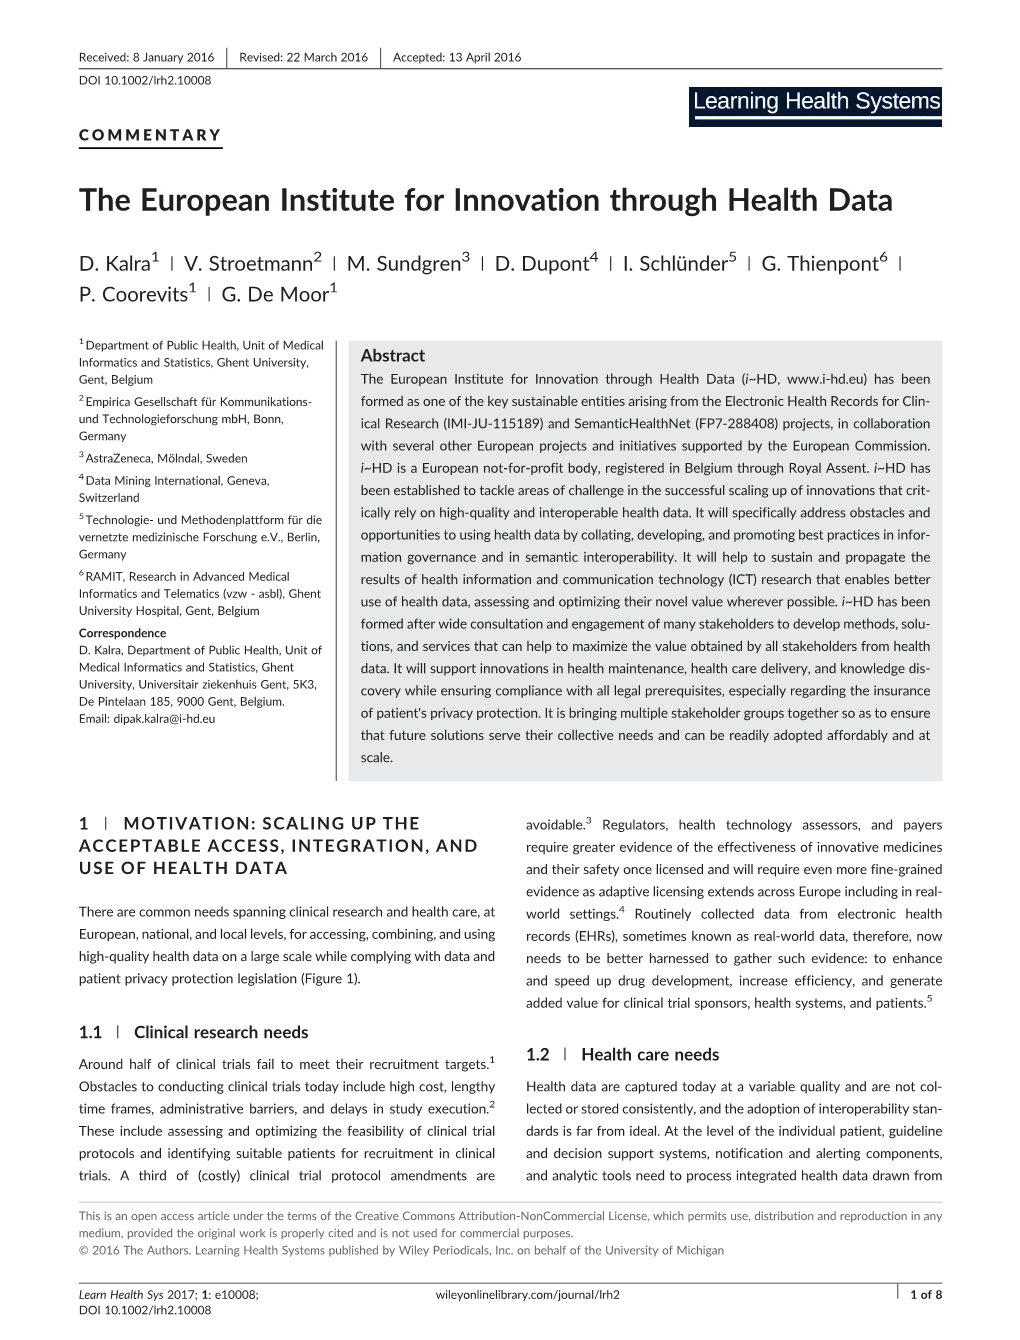 The European Institute for Innovation Through Health Data